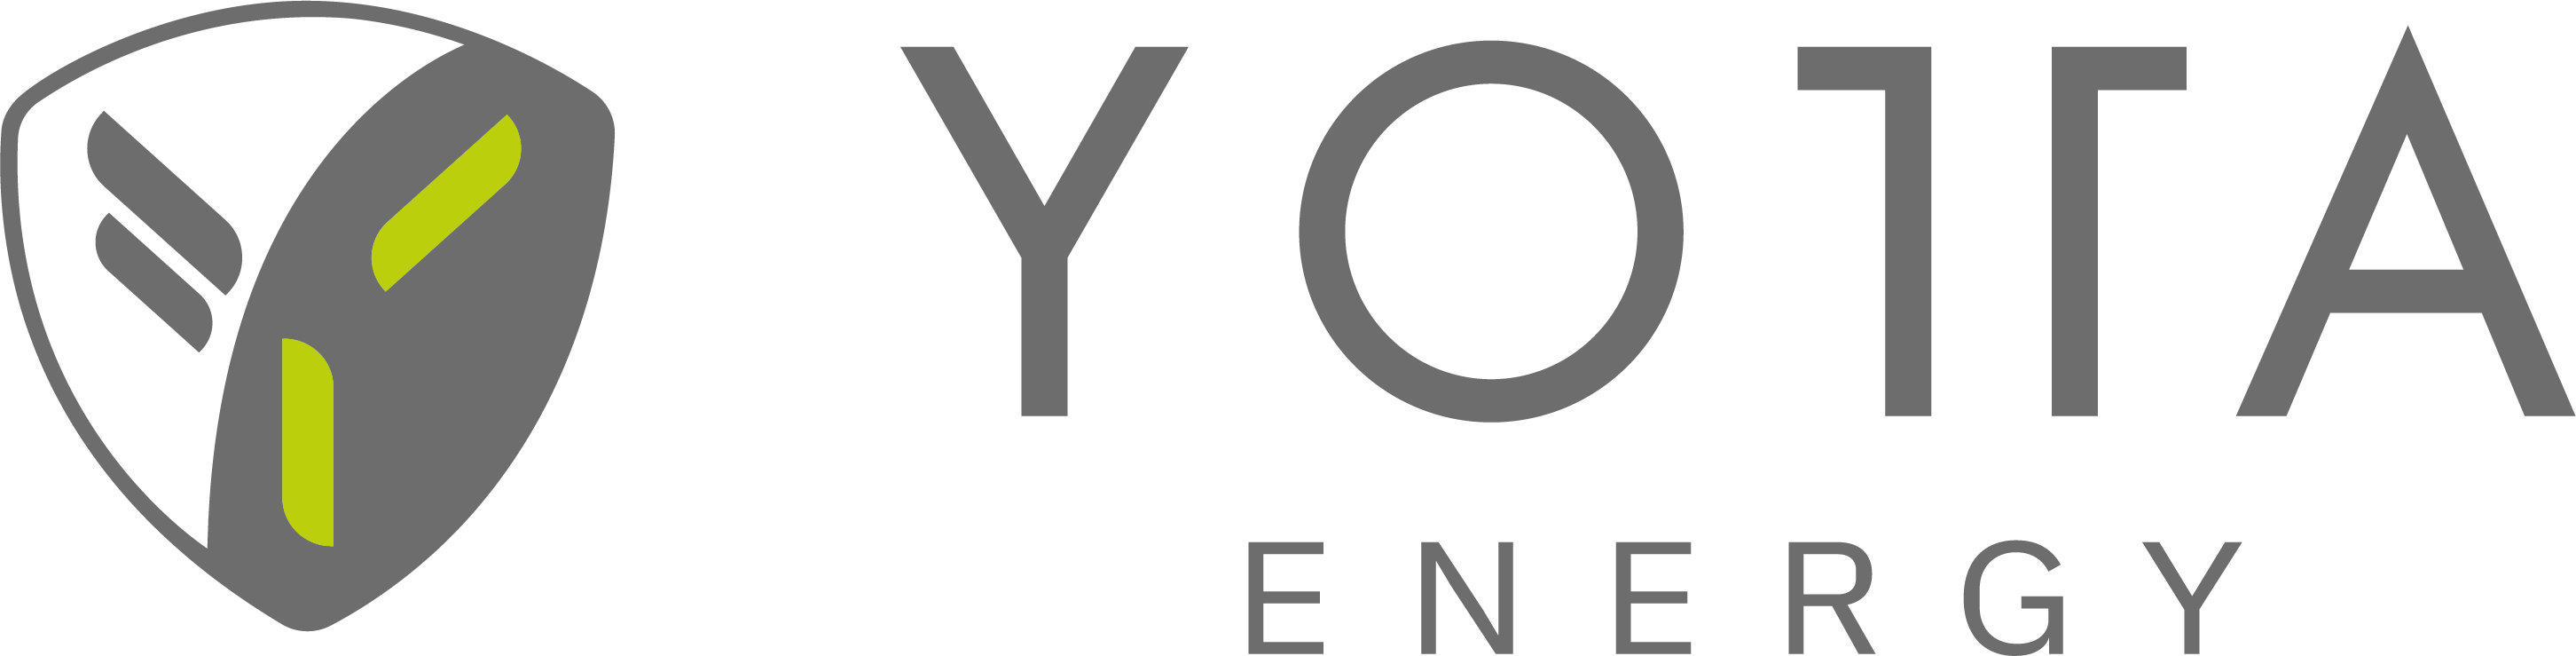 Yotta Energy Logo_Horizontal_Full Color